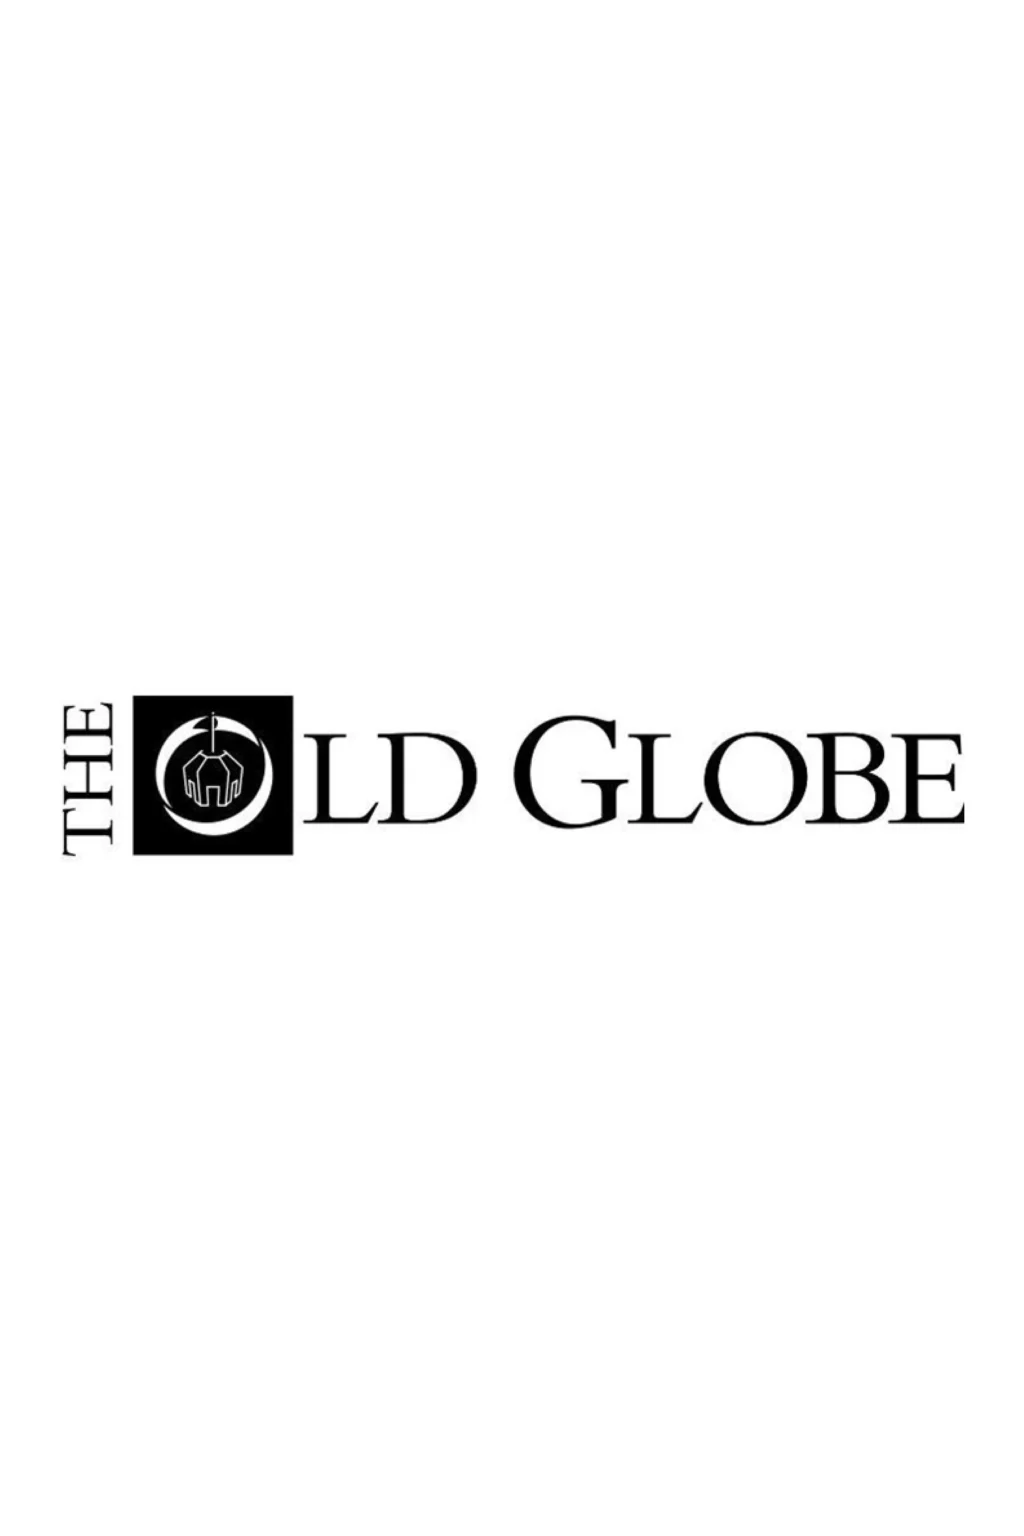 the old globe